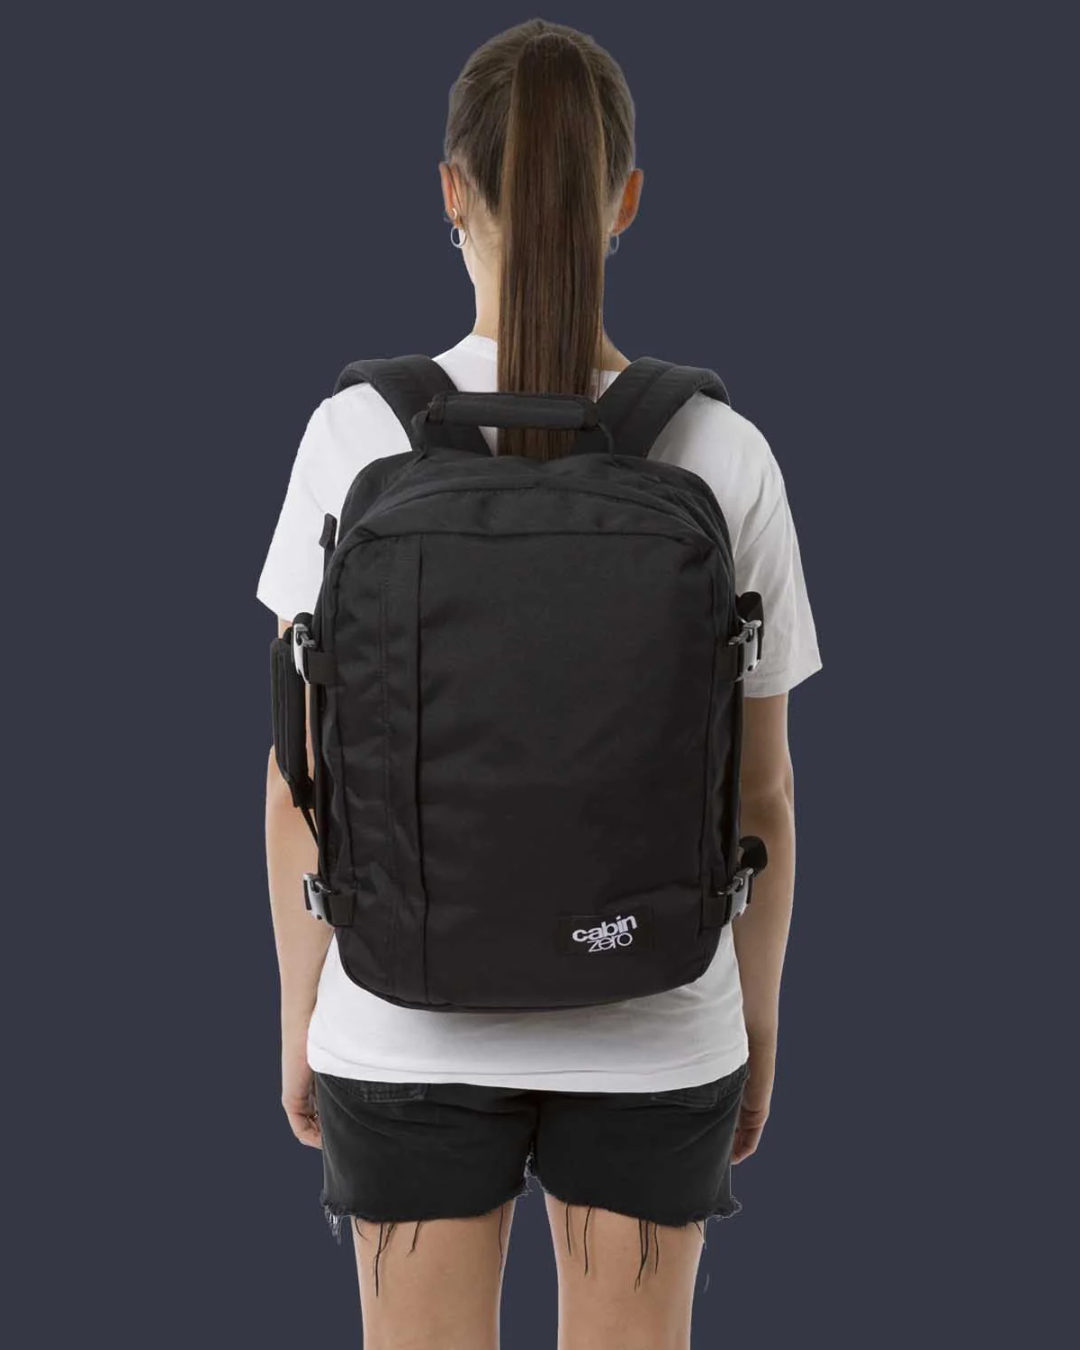 Cabin Zero Classic backpack CZ081201